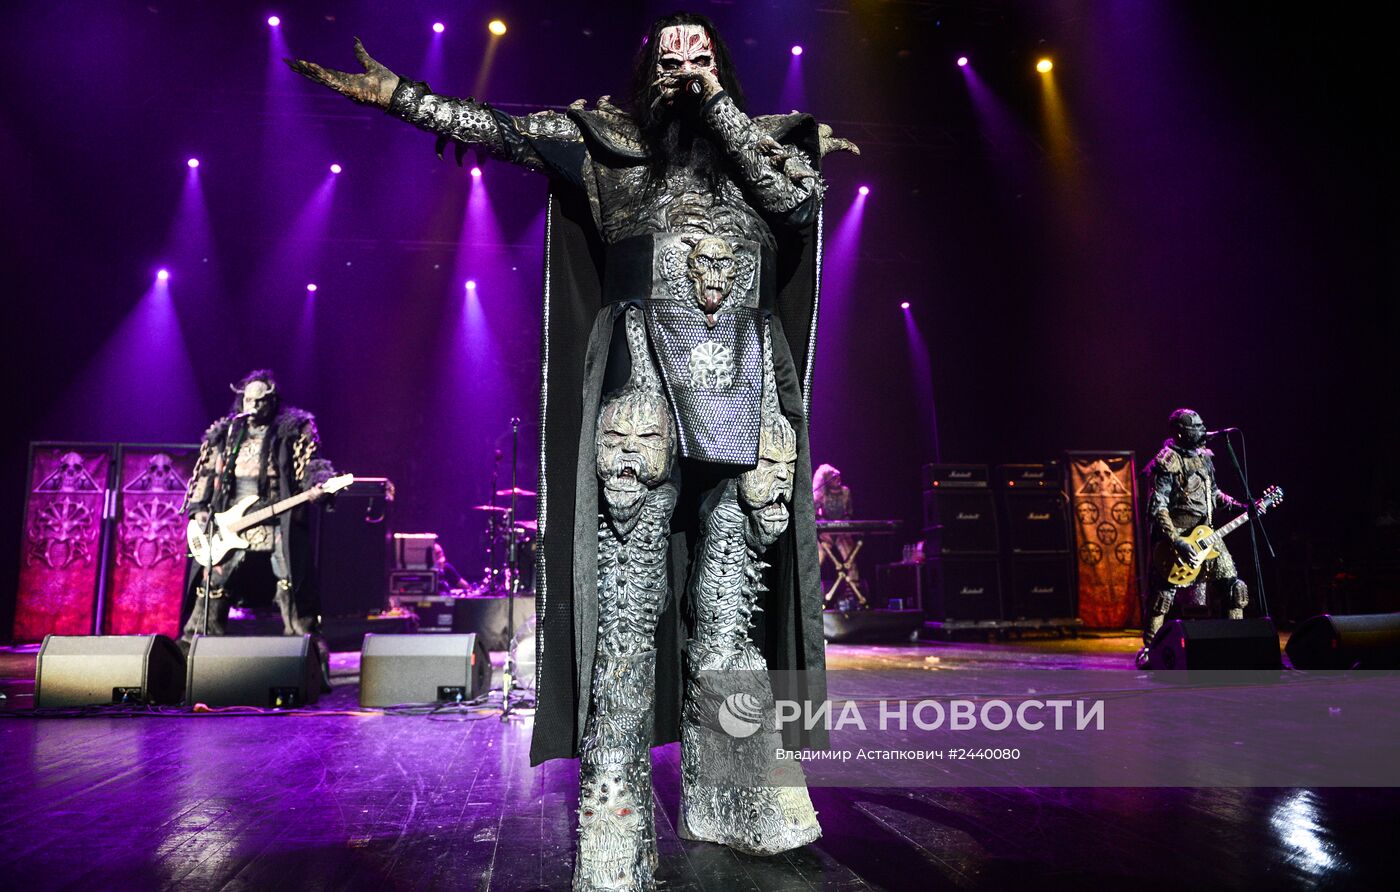 Концерт Made in Finland в Москве